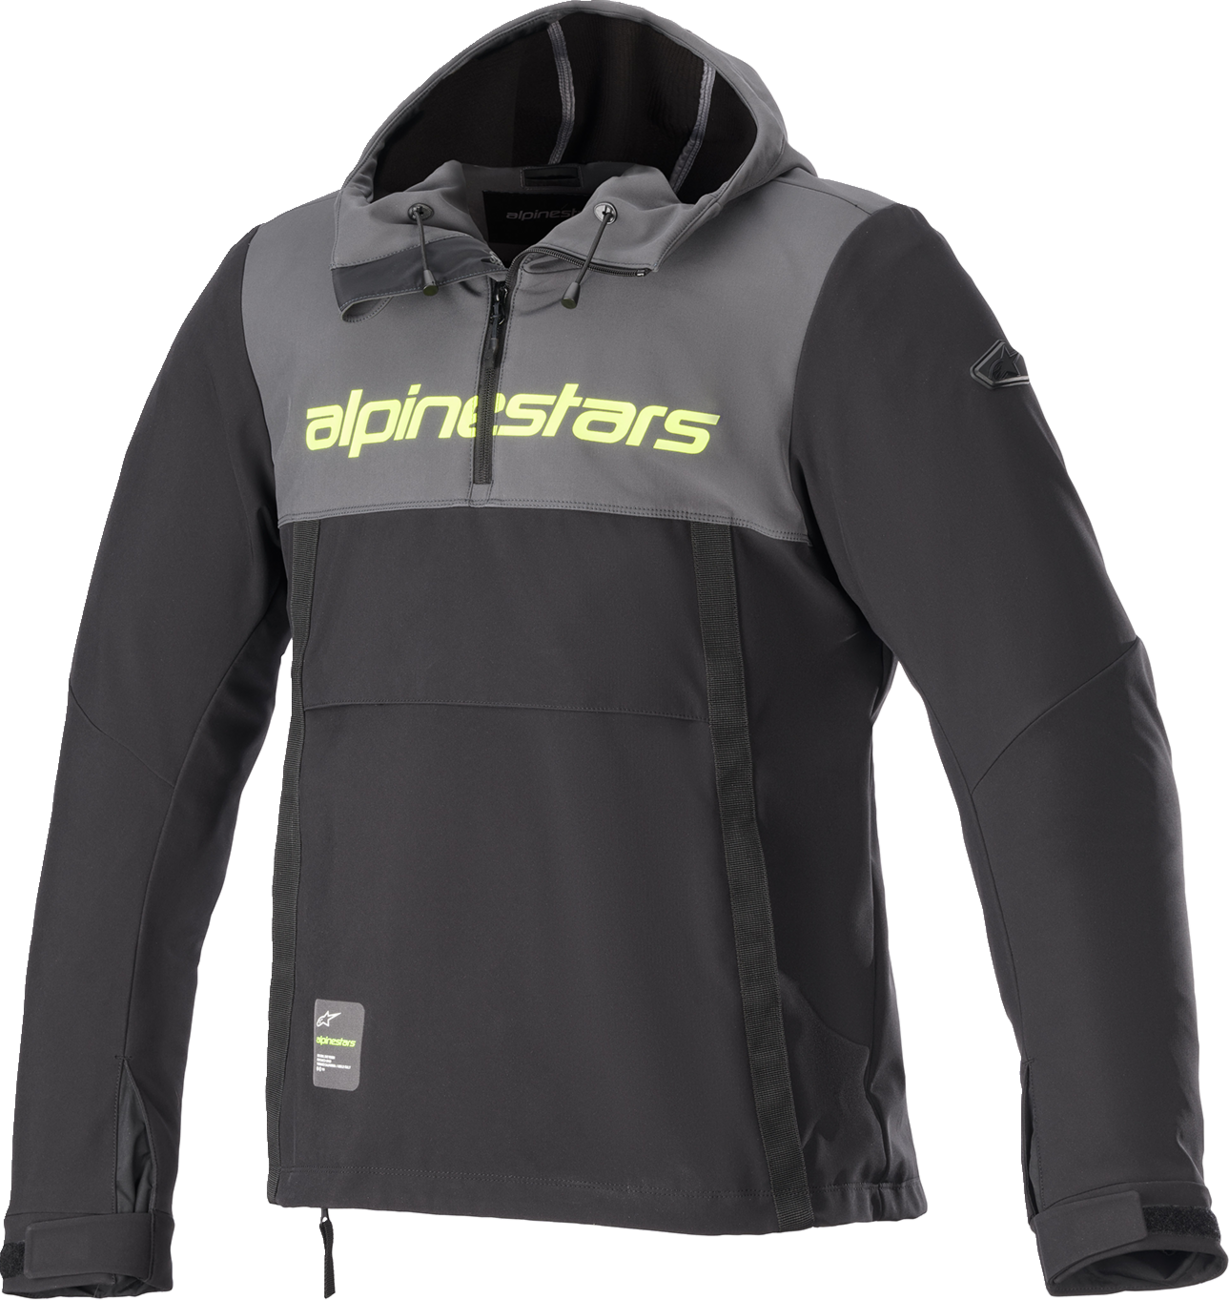 ALPINESTARS Sherpa Jacket - Black/Gray/Yellow - 4XL 4208123-9151-4X